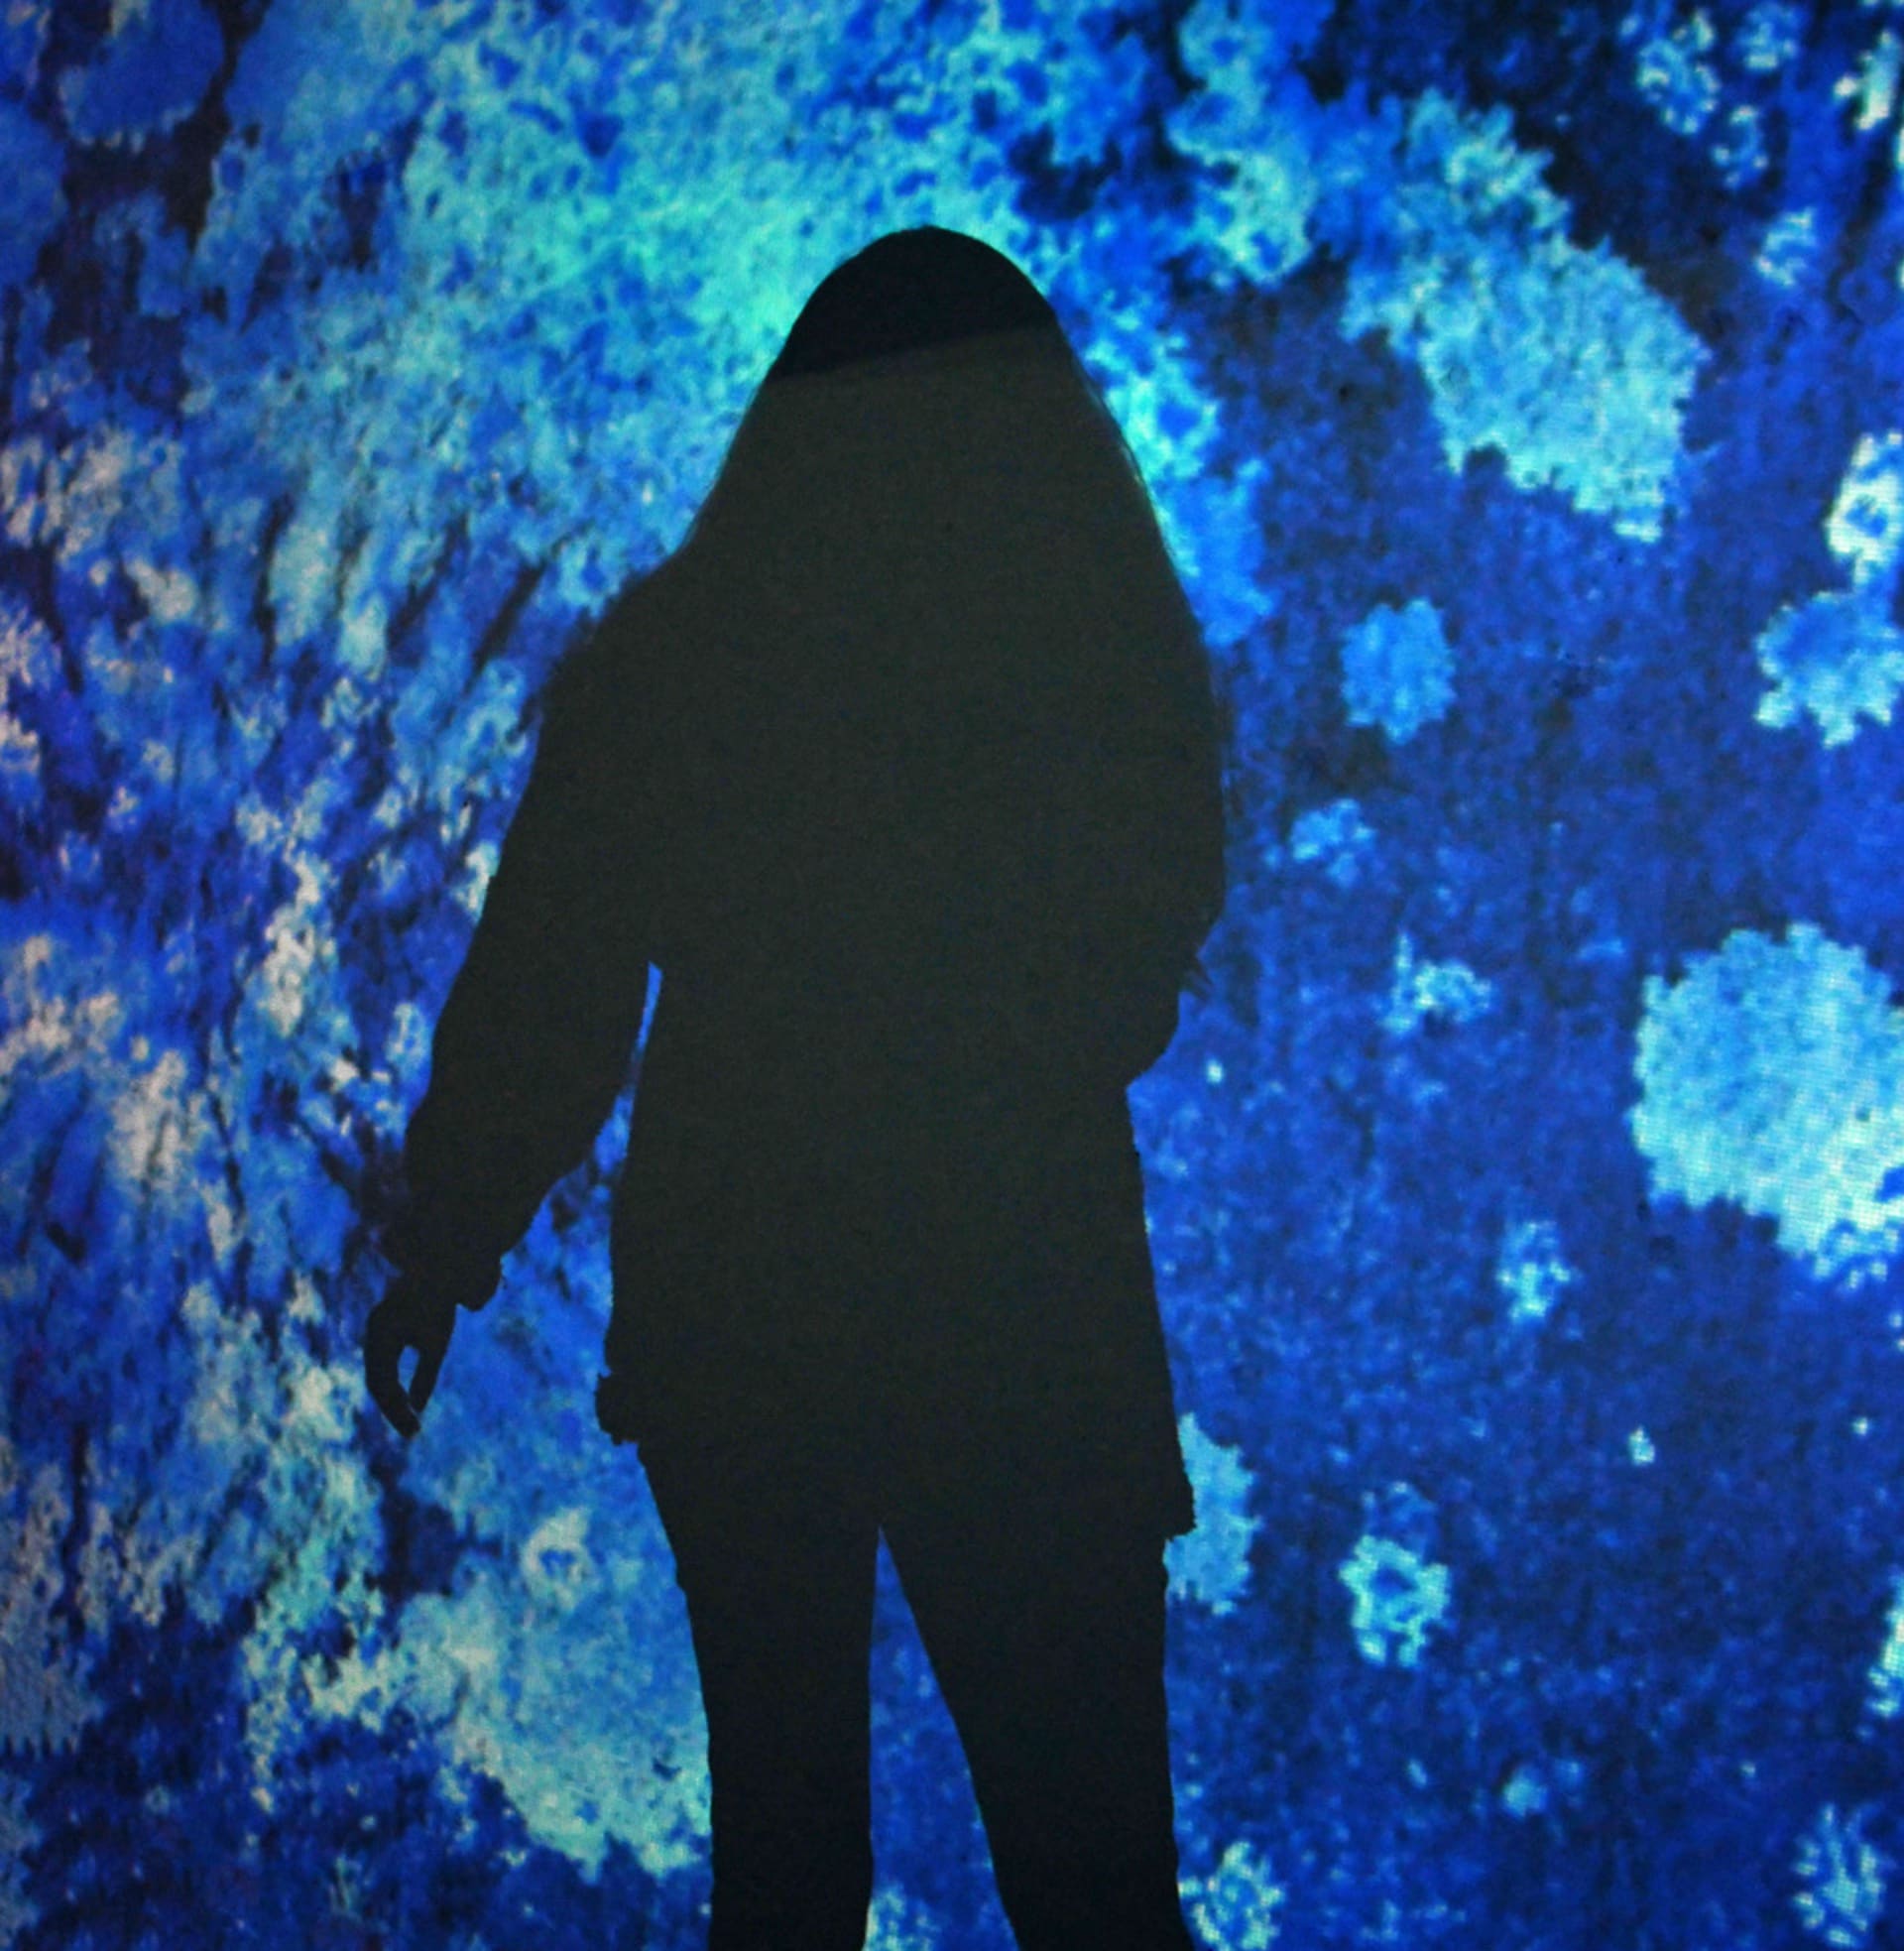 Blue cyanotype with shadow figure.